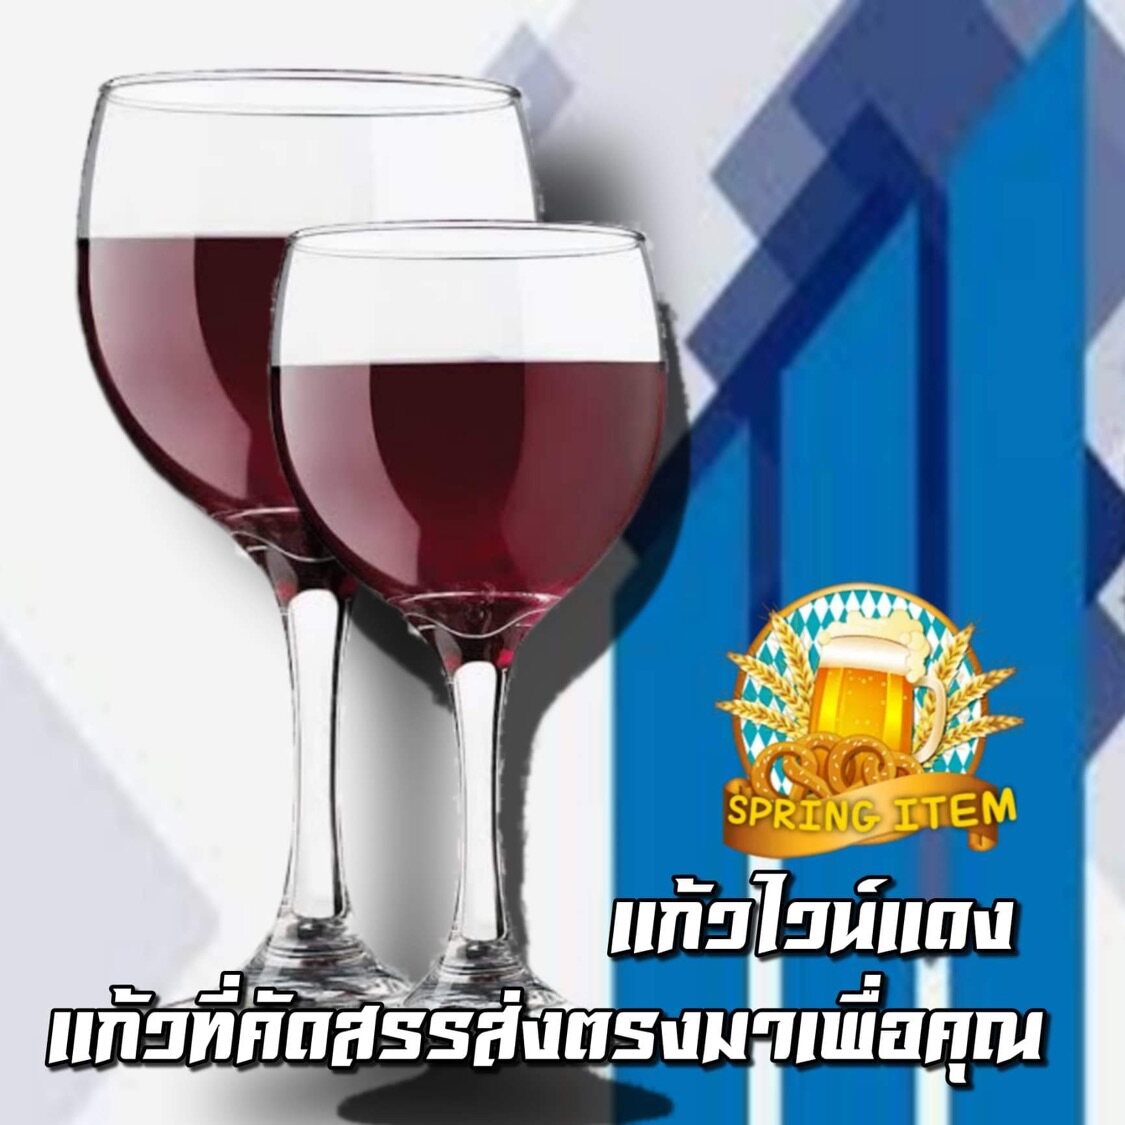 [SP] แก้วไวน์ แก้วก้านยาว แก้วไวน์ขาว ไวน์แดง แก้วน้ำผลไม้ แก้วสำหรับปาตี้ แก้วงานเลี้ยง แก้วสังสรรค์ คุณภาพดี ราคาถูก ทนทาน แข็งแรง